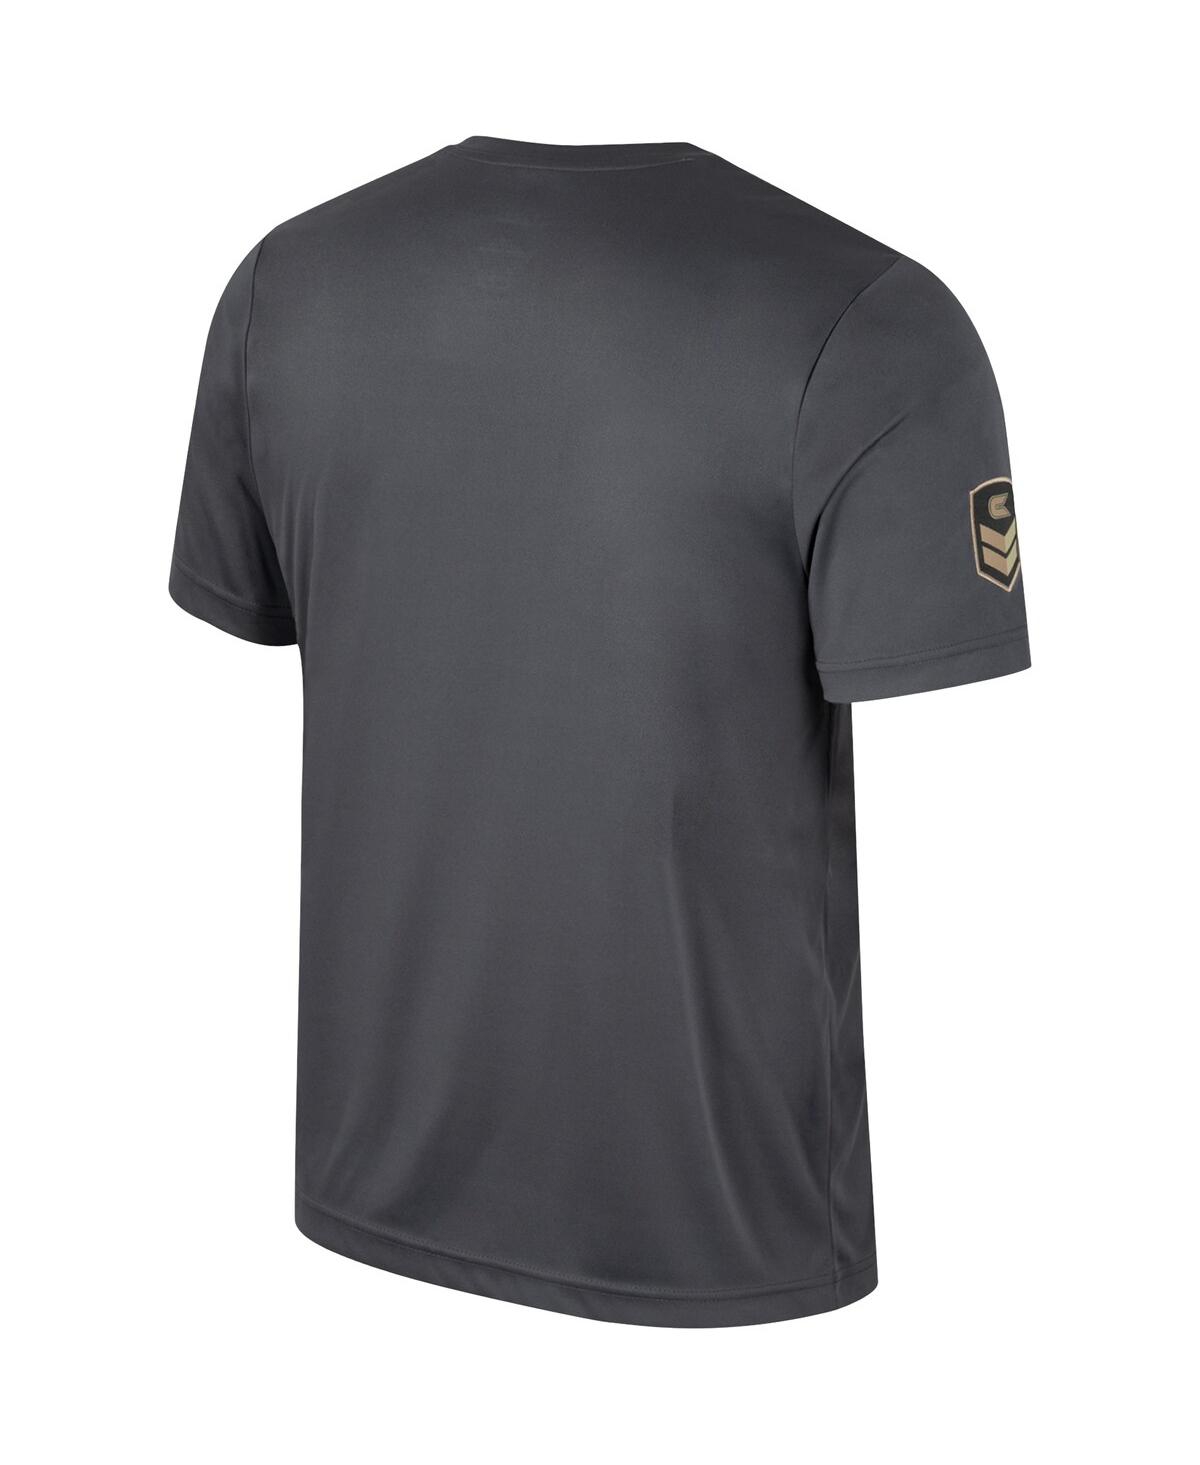 Shop Colosseum Men's  Charcoal Alabama Crimson Tide Oht Military-inspired Appreciation T-shirt